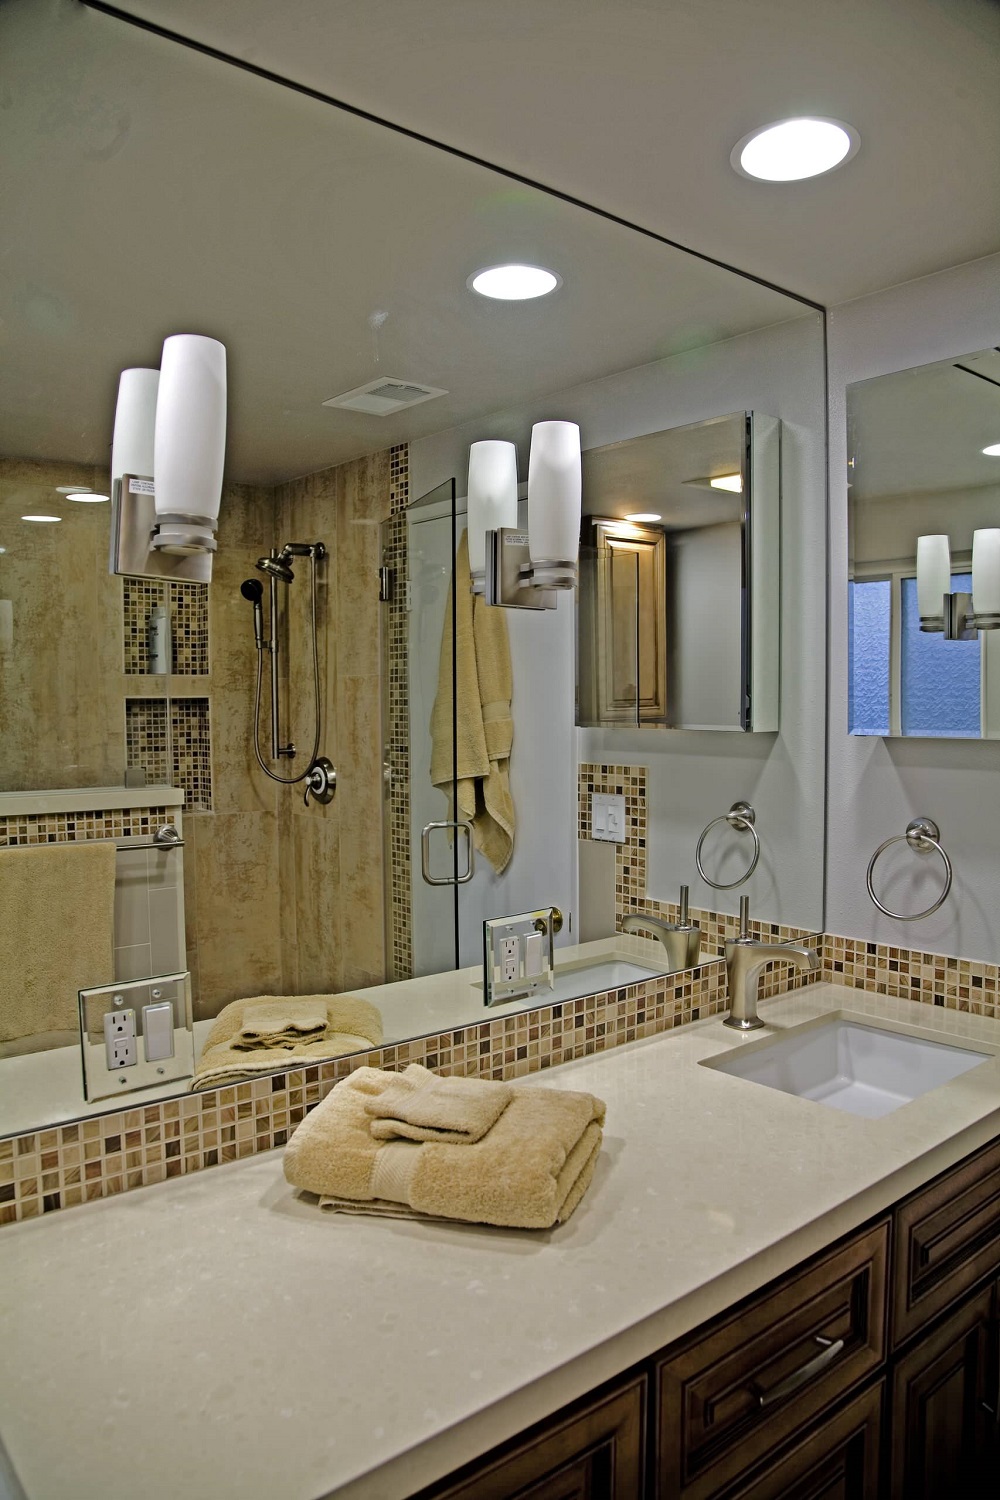 van13-1 Neat corner bathroom vanity ideas you will find useful